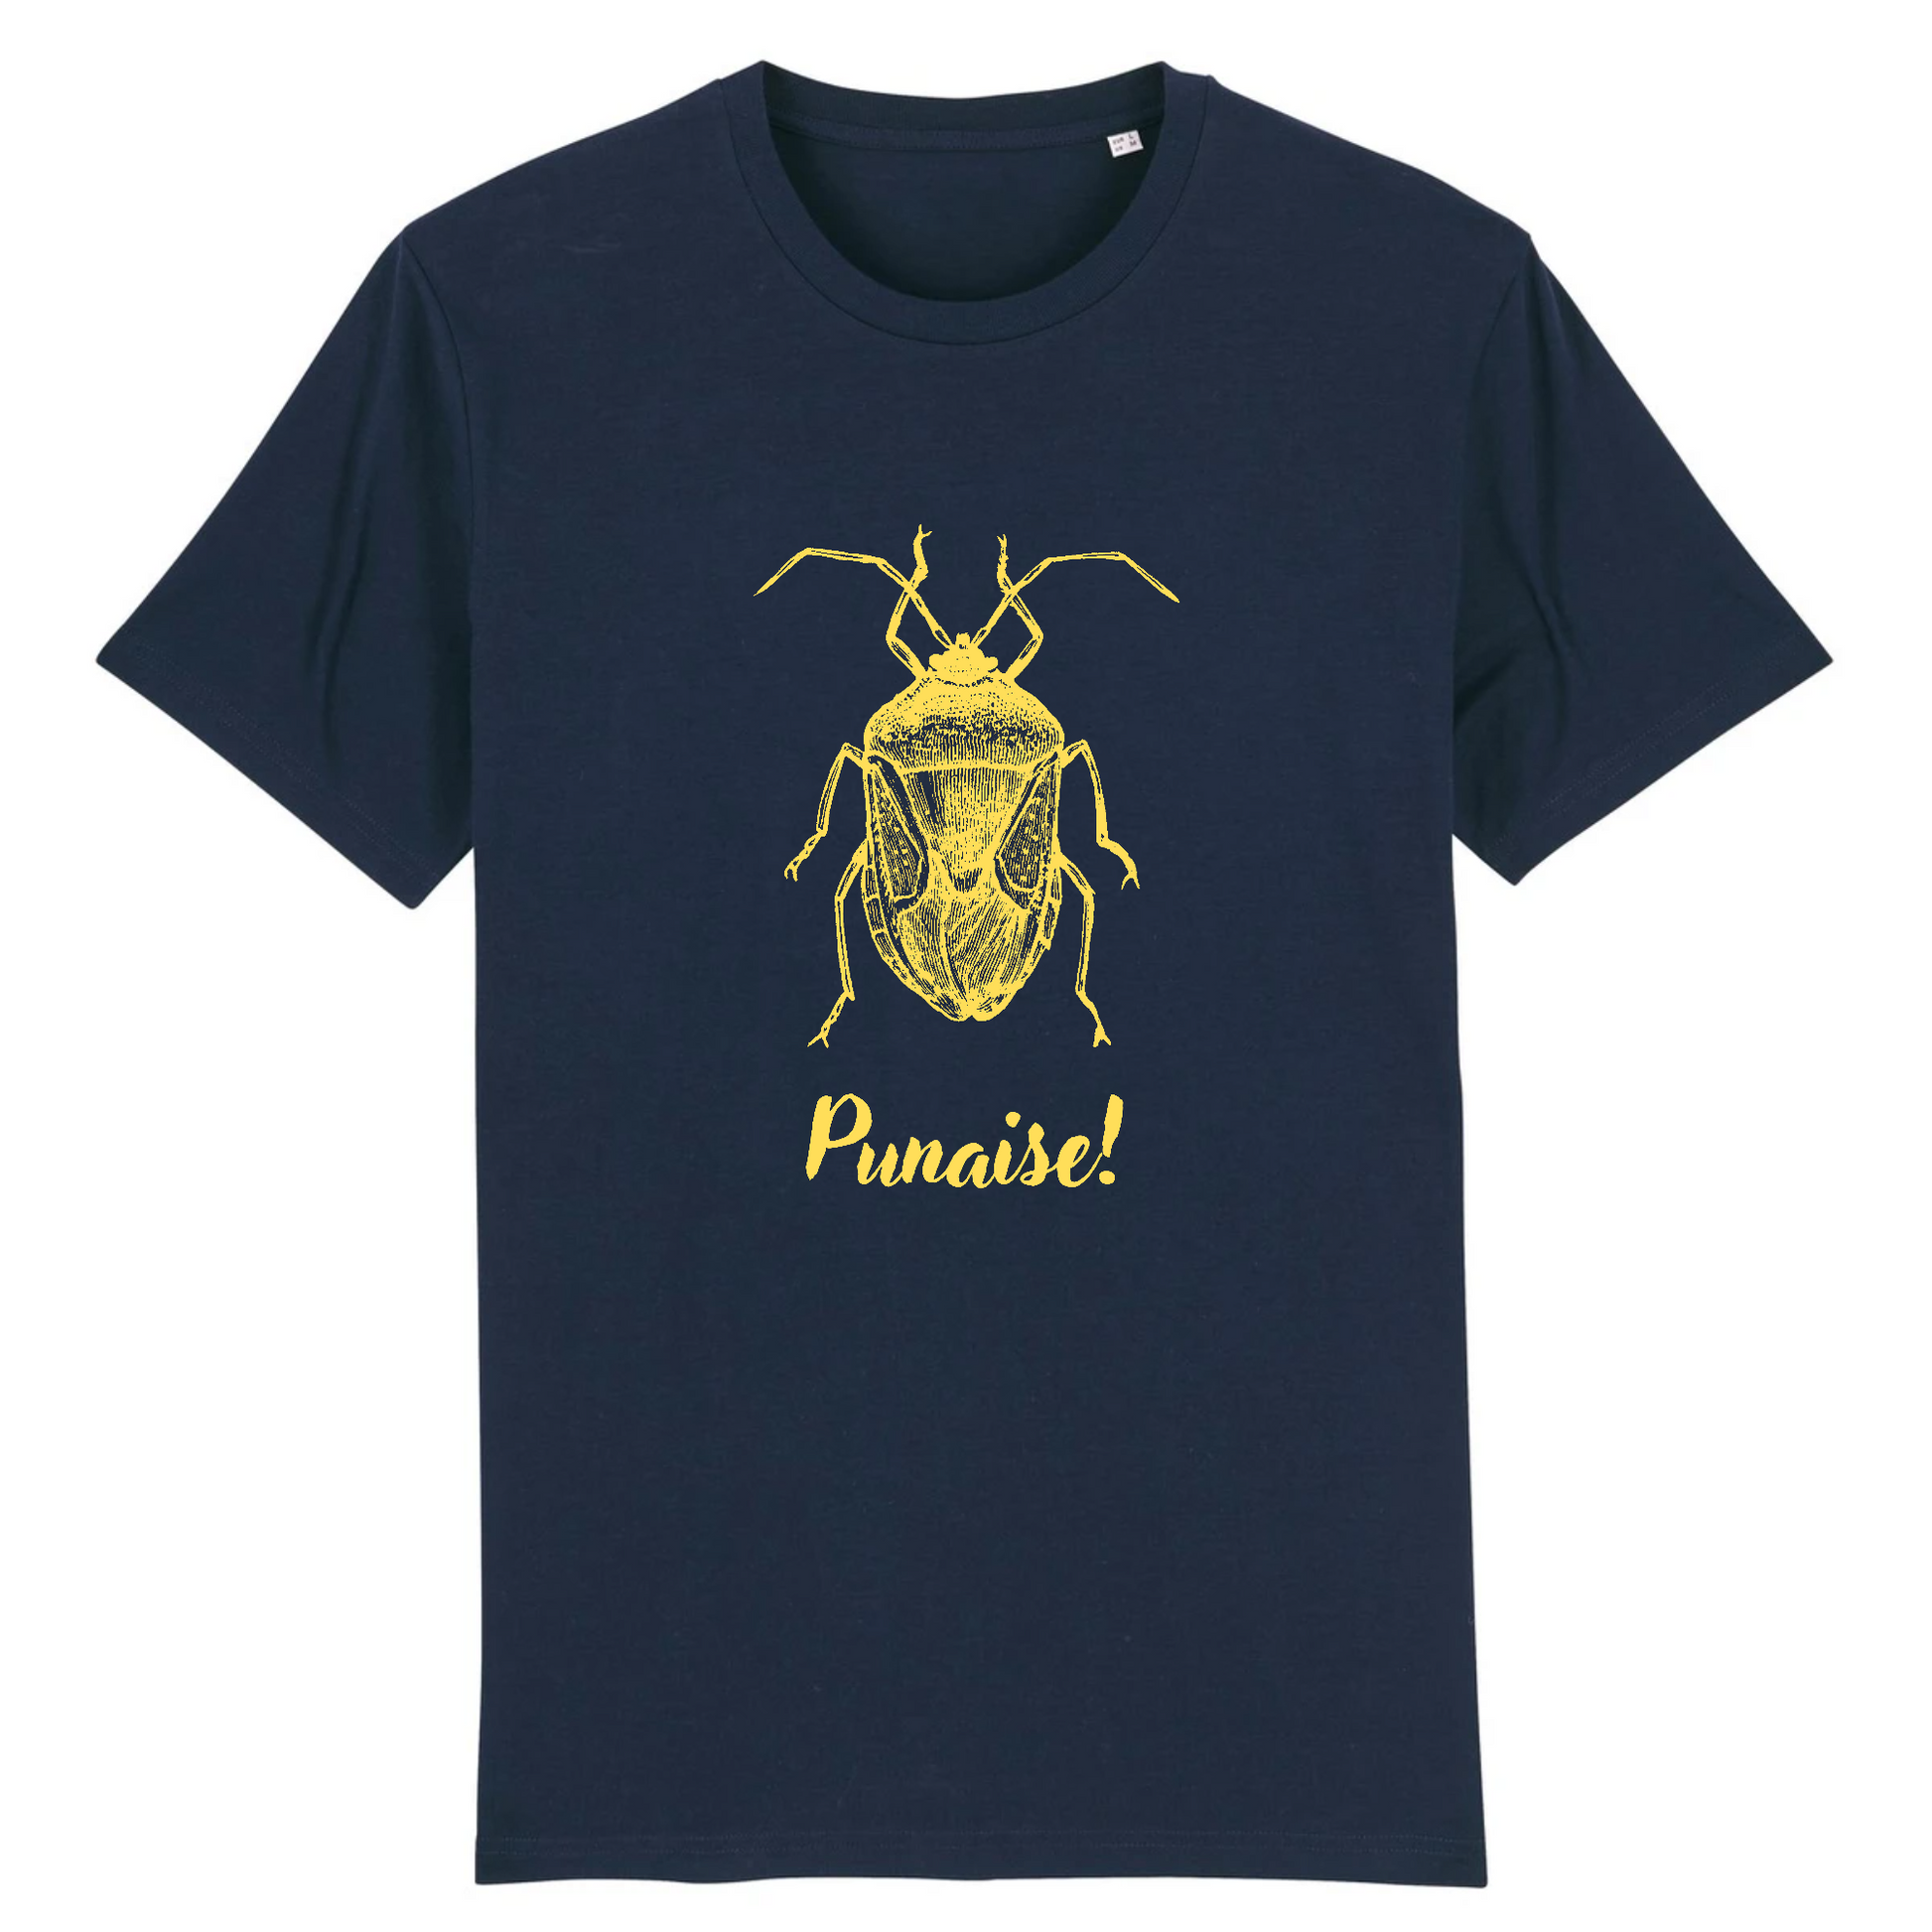 Punaise! | T-shirt Unisexe - Coton BIO - CREATOR | Marine